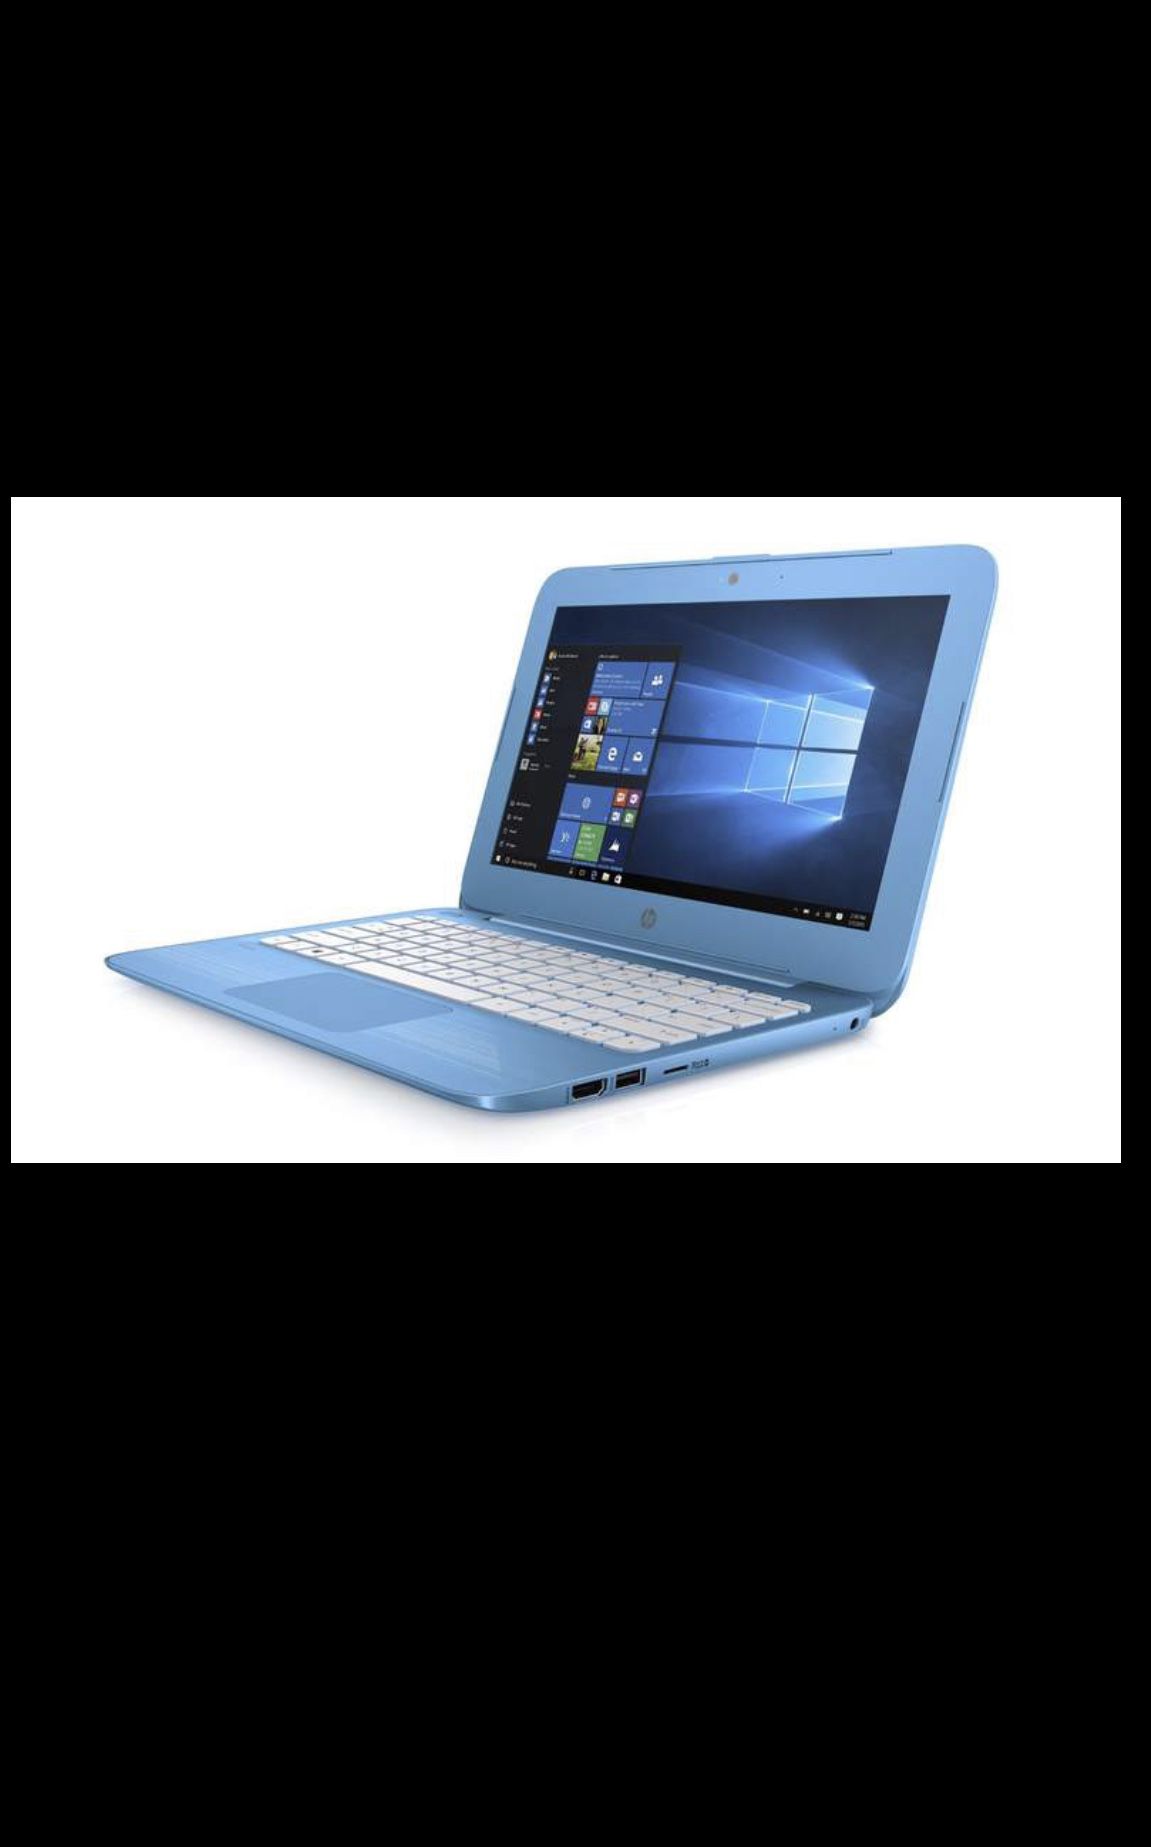 HP Stream 11.6” Laptop with Intel Celeron N3060 CPU, 4GB RAM, and 32GB Flash Storage (Refurbished A-Grade)